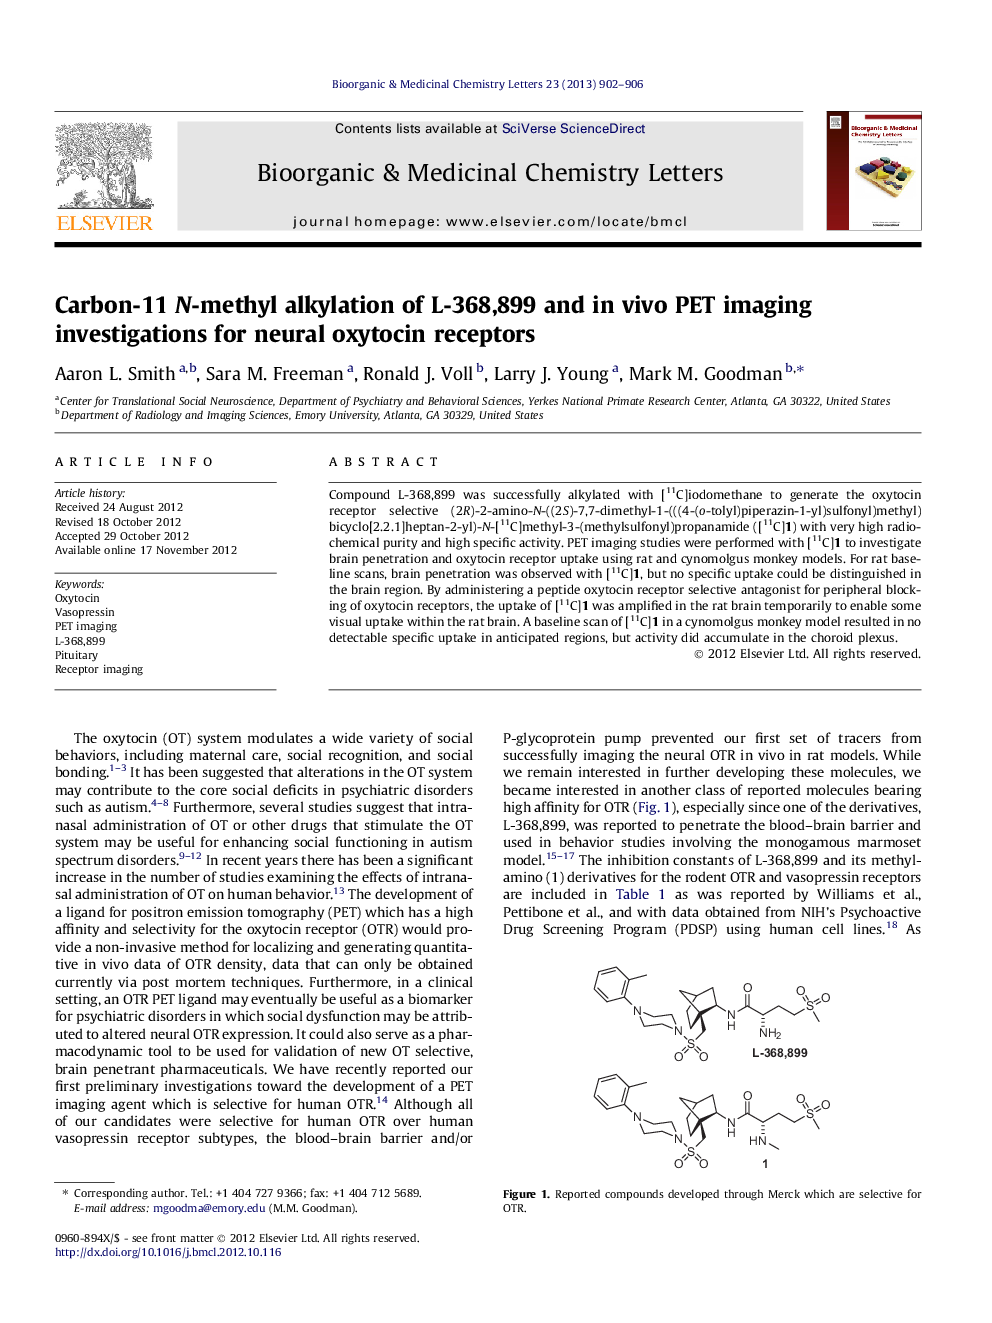 Carbon-11 N-methyl alkylation of L-368,899 and in vivo PET imaging investigations for neural oxytocin receptors